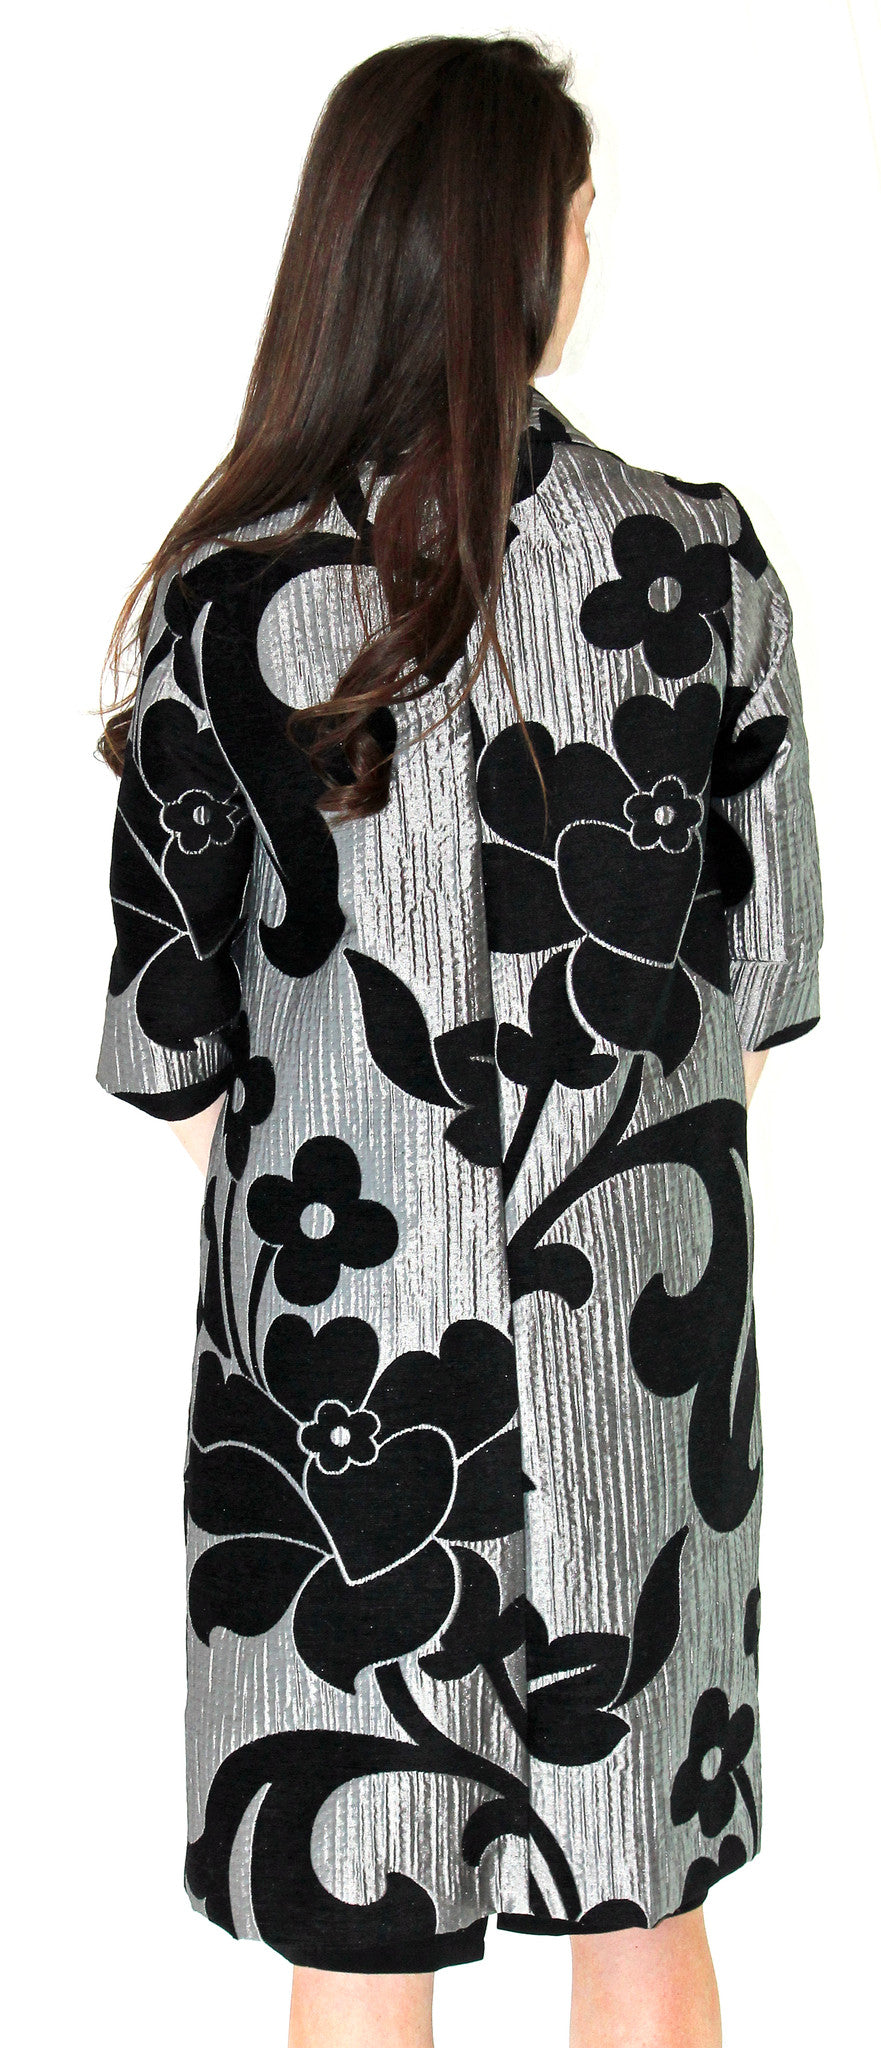 Janet Deleuse Designer Silk Brocade Coat, SALE!